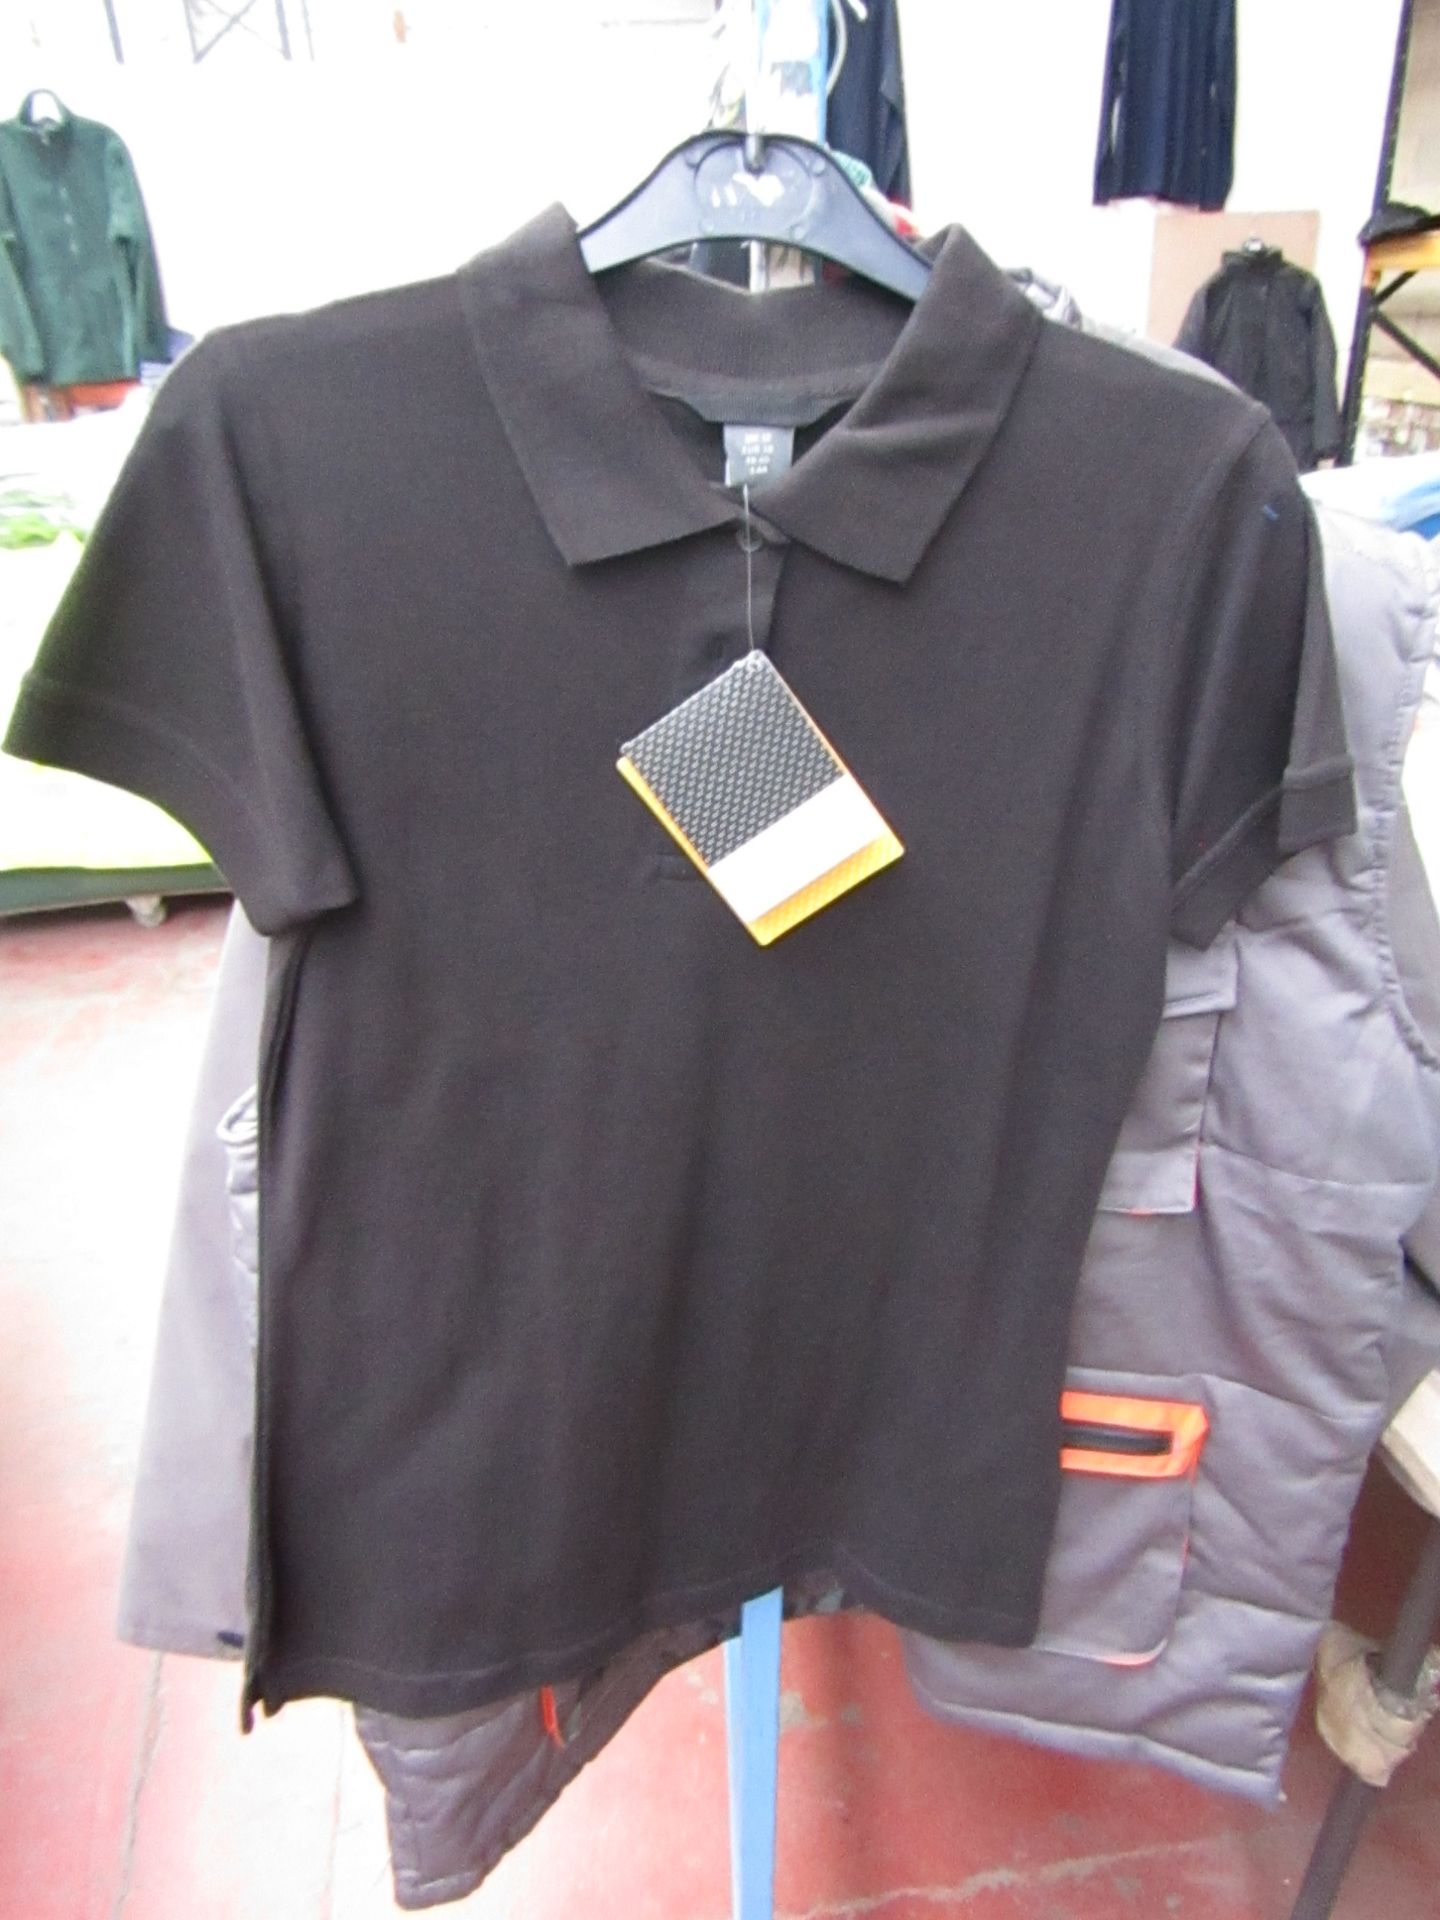 2x Ladies Regatta Black Polo Shirt, Size 16. New in Packaging